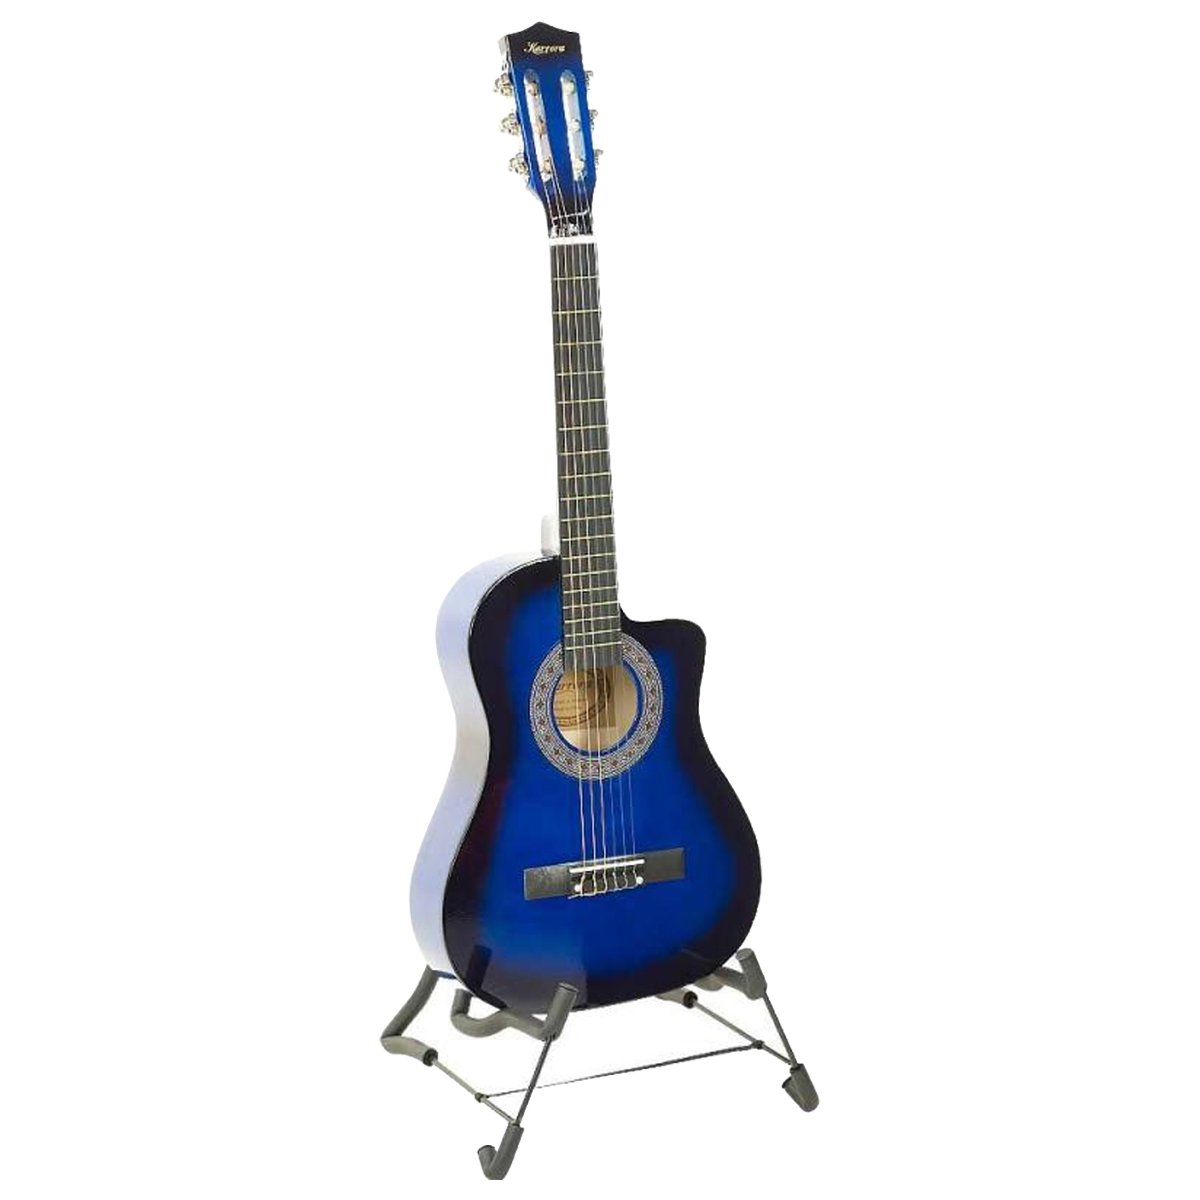 Karrera 38in Pro Cutaway Acoustic Guitar with Bag Strings - Blue Burst 1